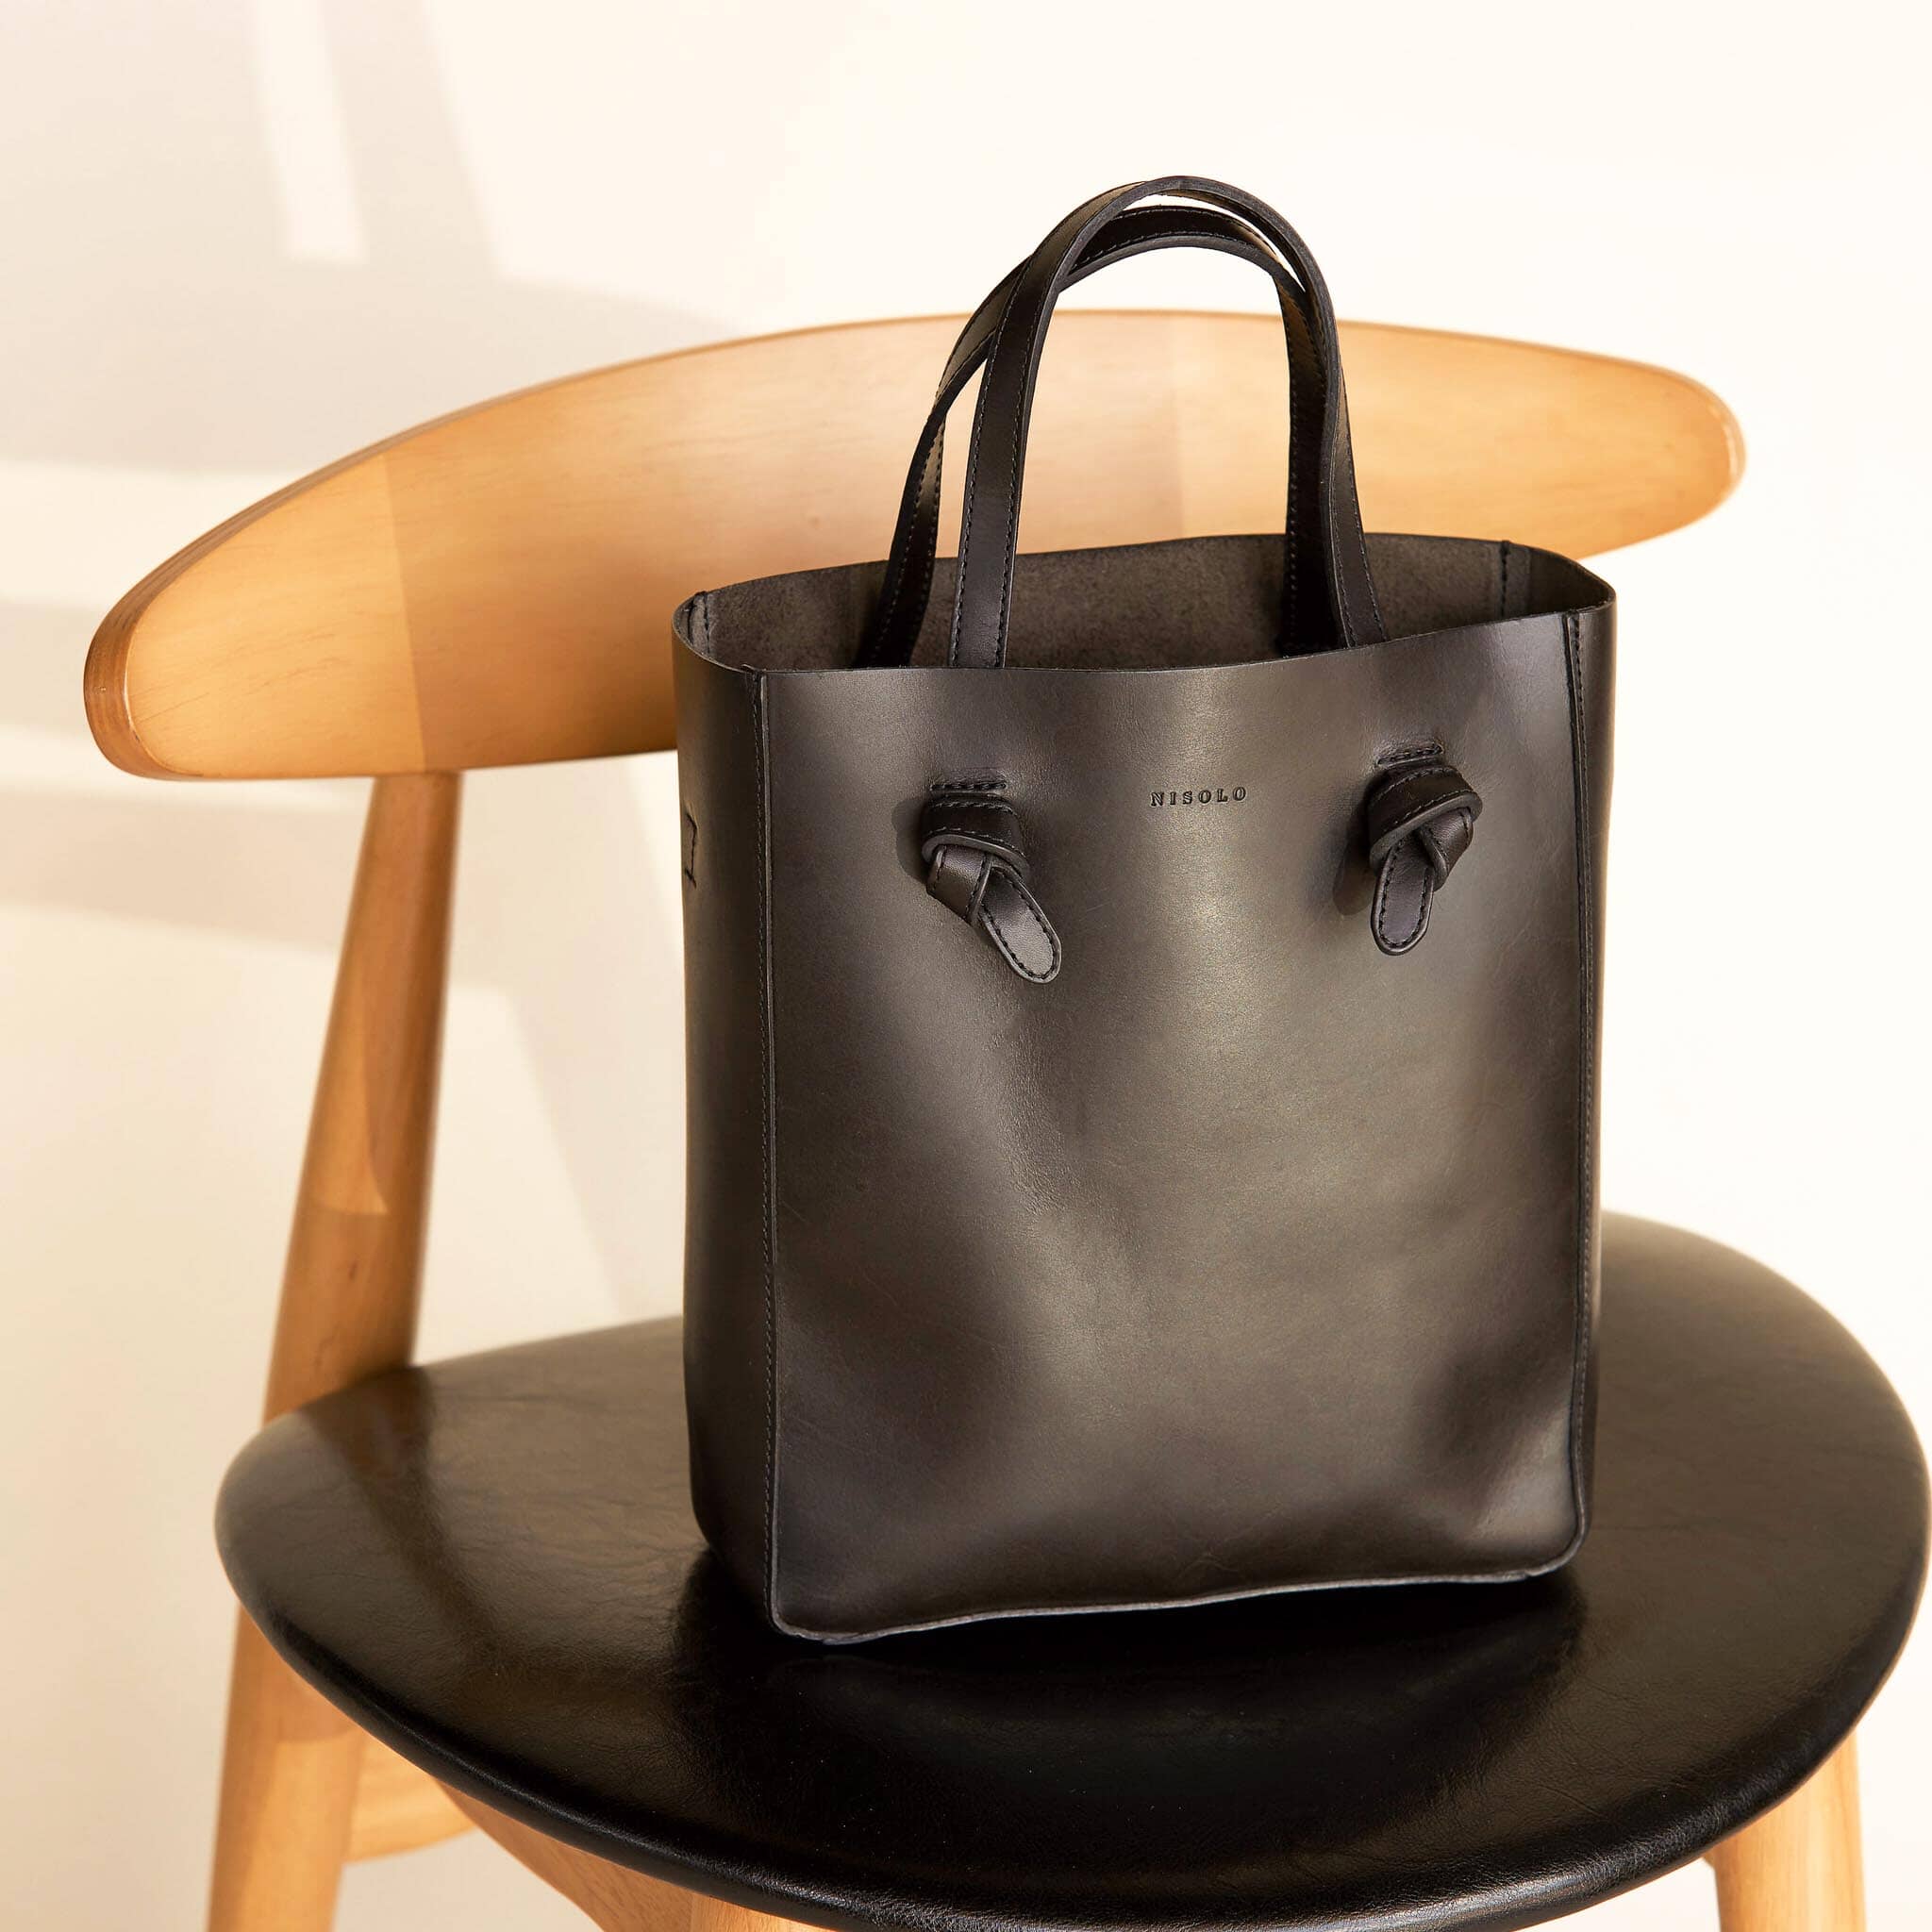 Simone Convertible Shopper Black Leather Handbag - unlined Nisolo 